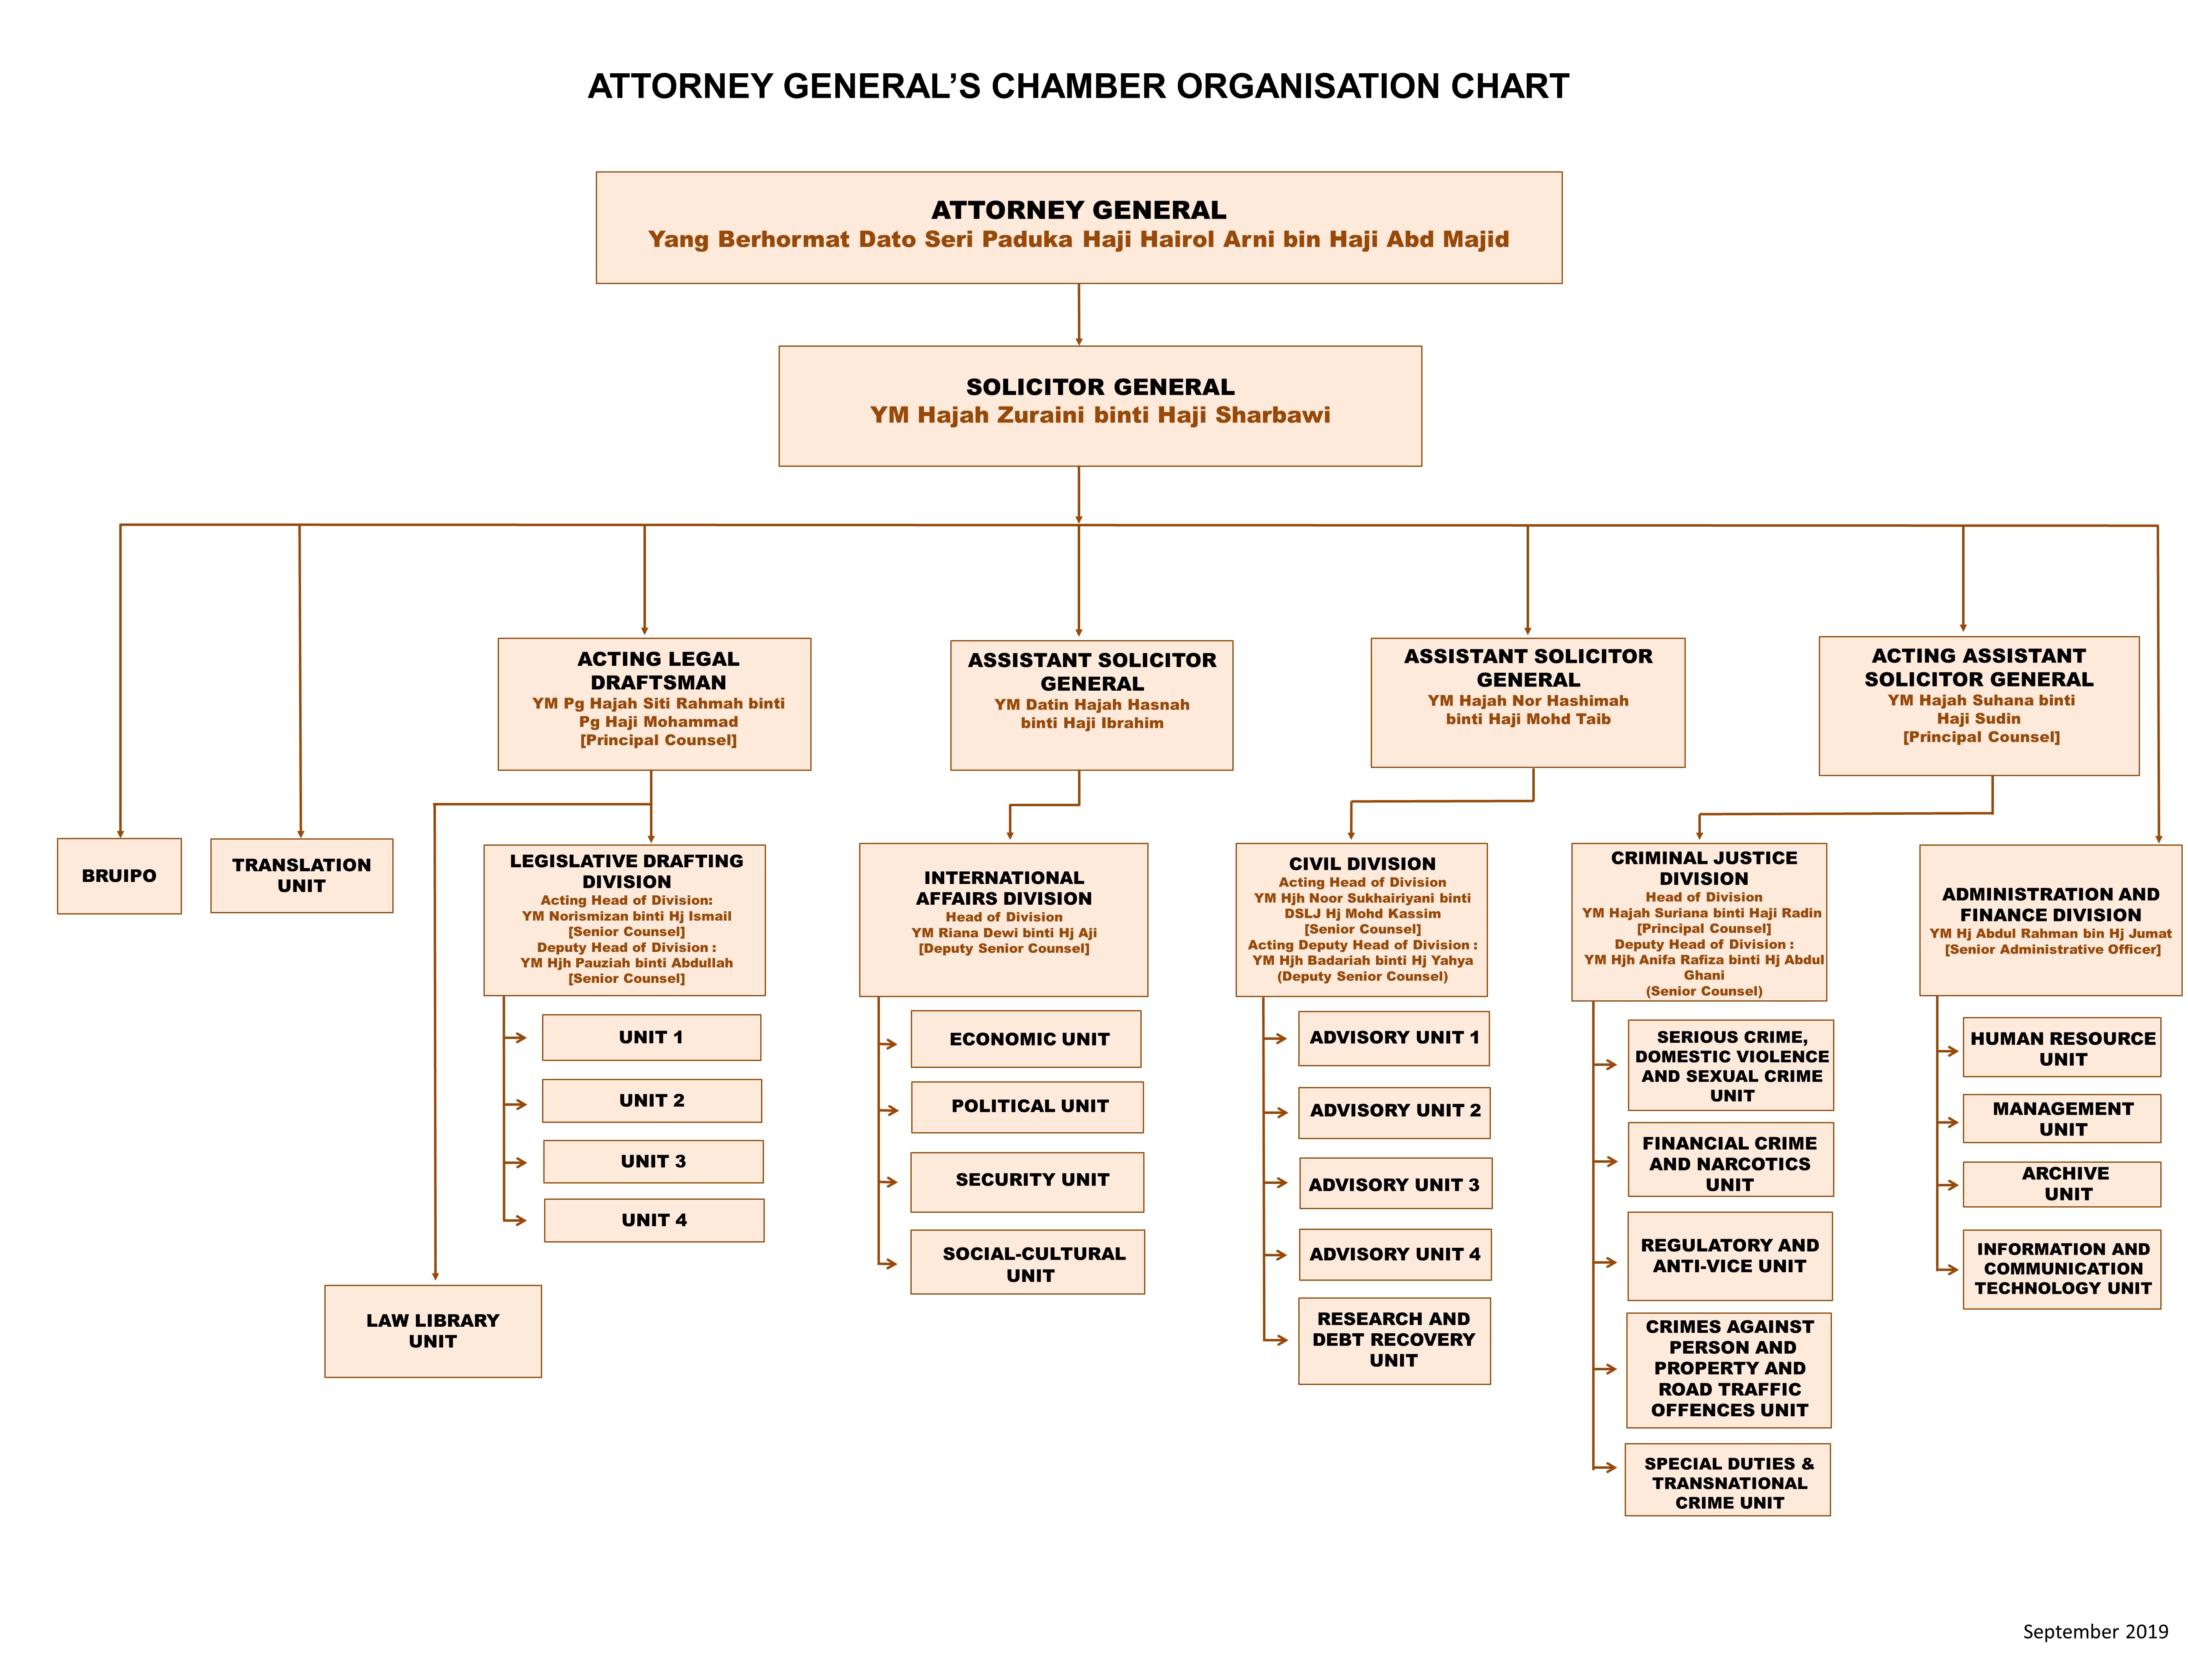 AGC Organisation Structure-ENG.JPG